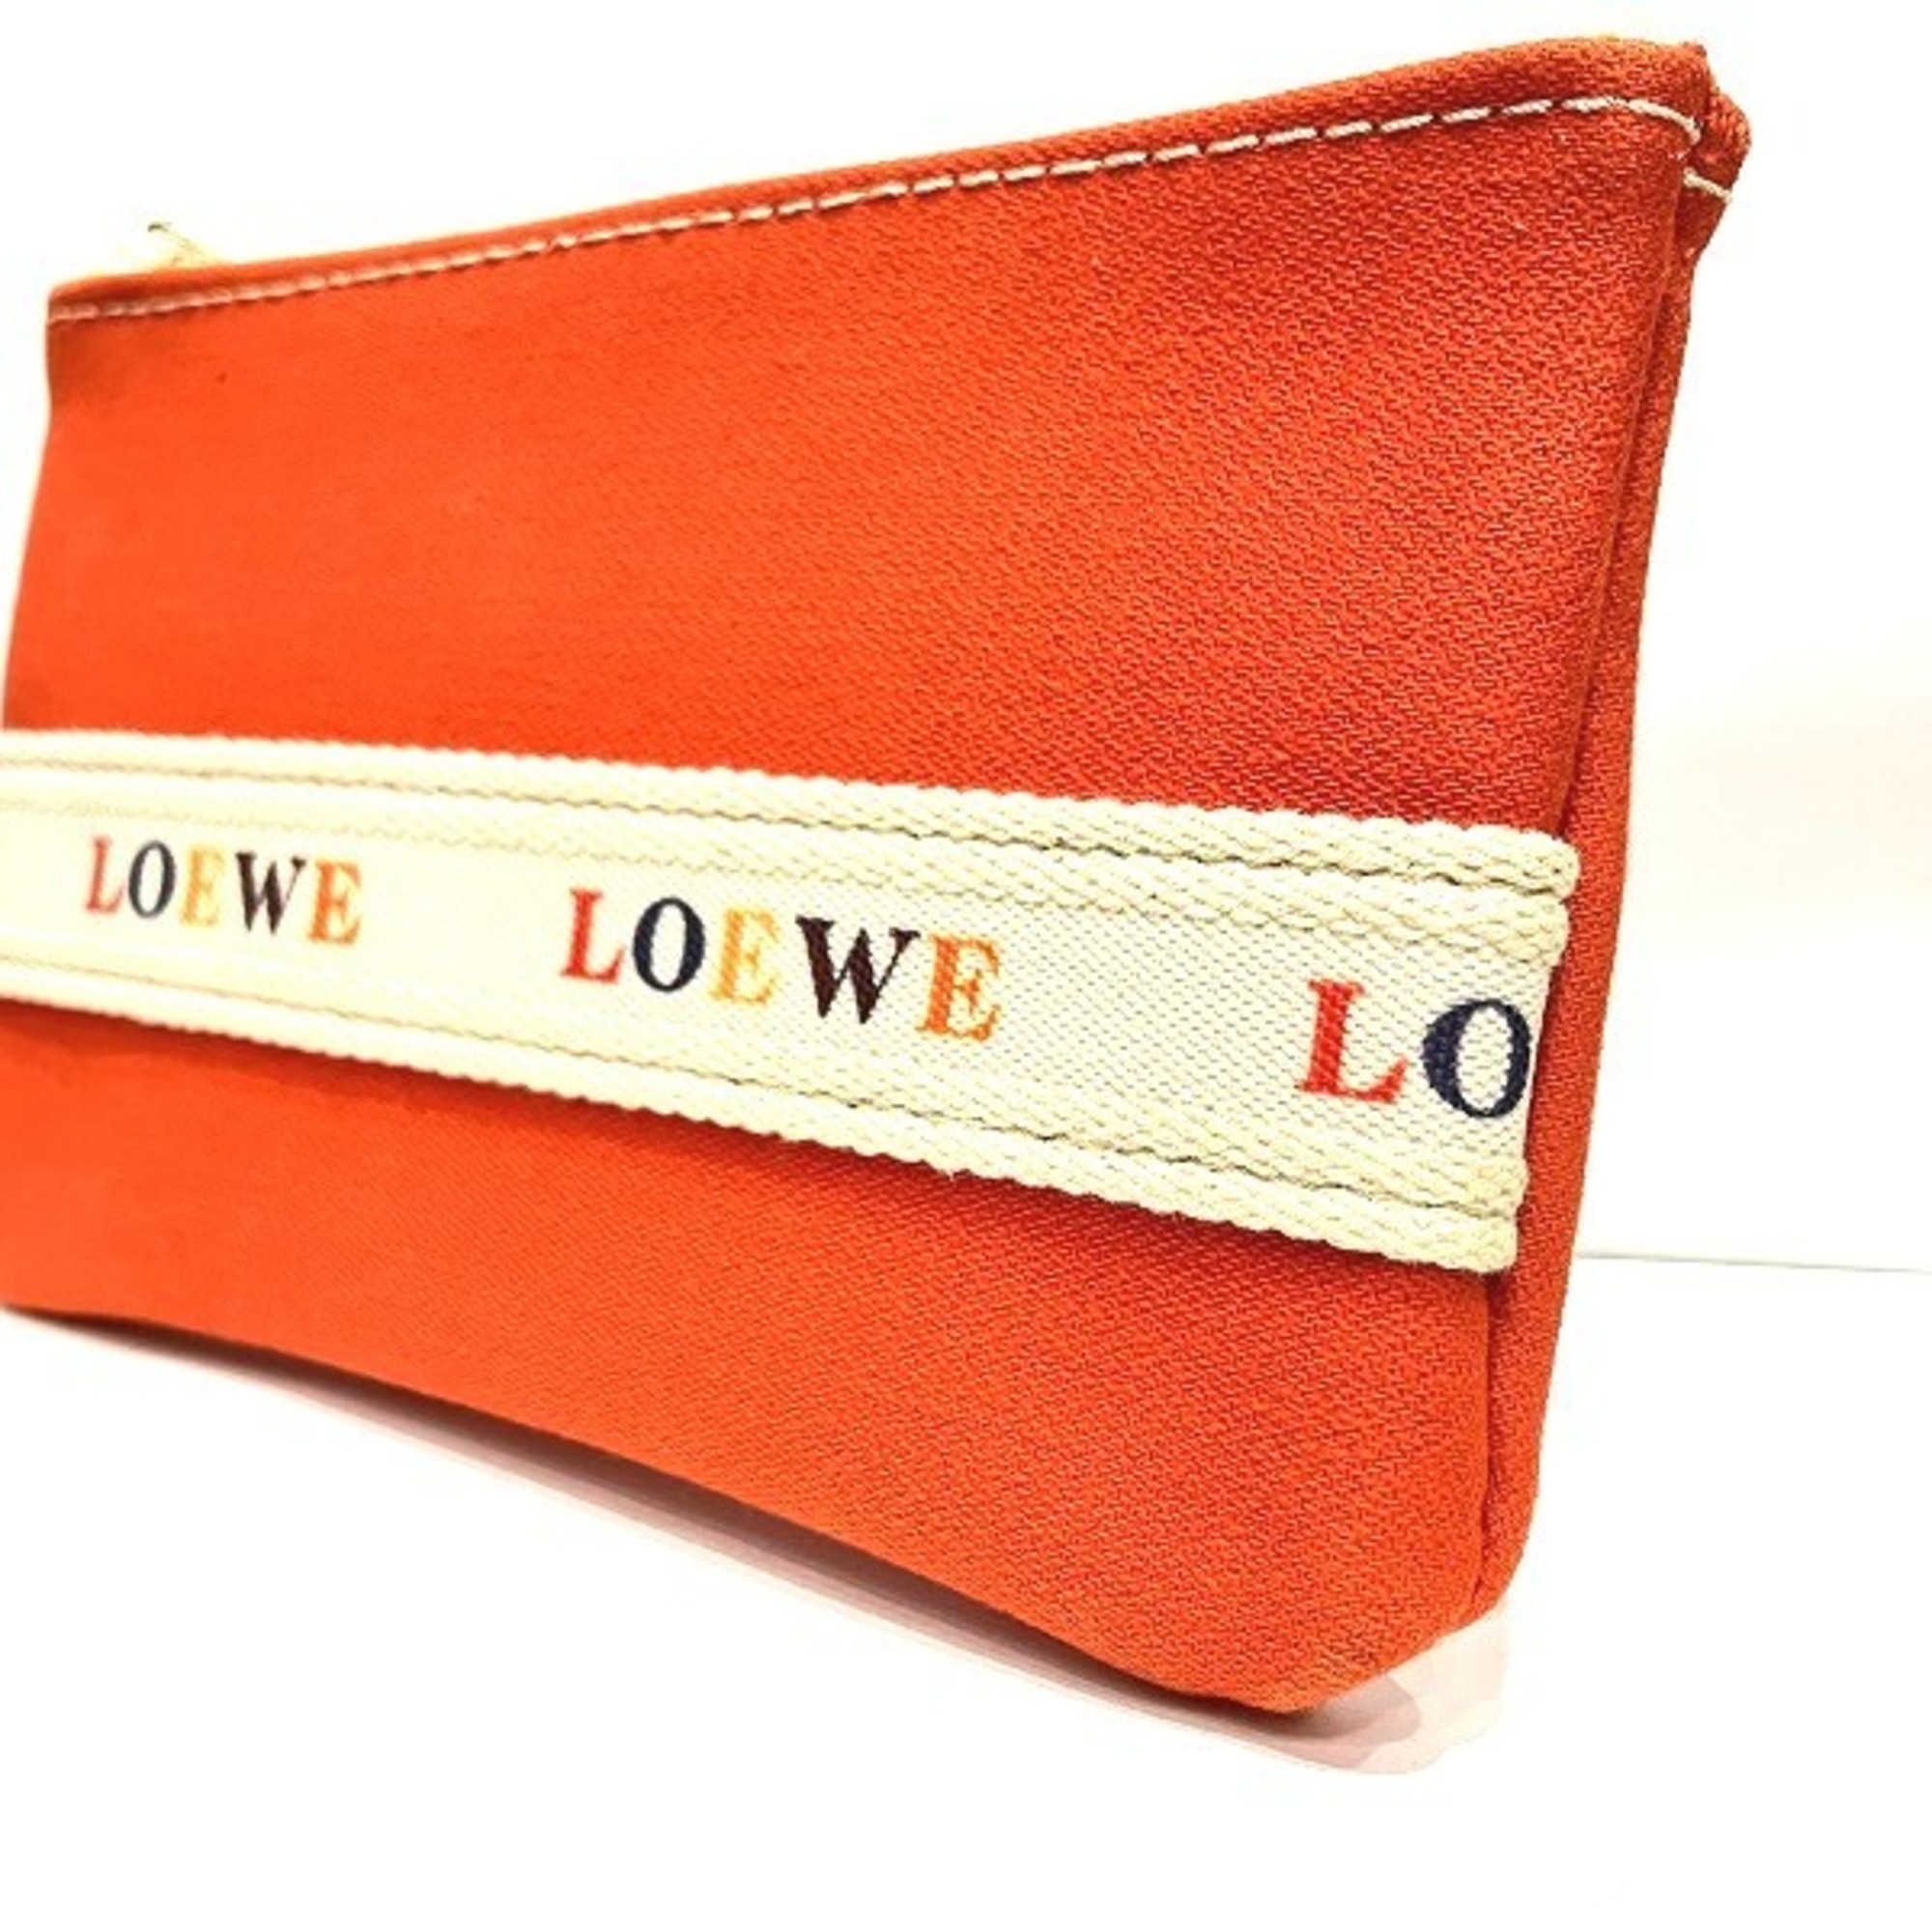 LOEWE Canvas Logo Brand Accessories Pouch Women's Bag